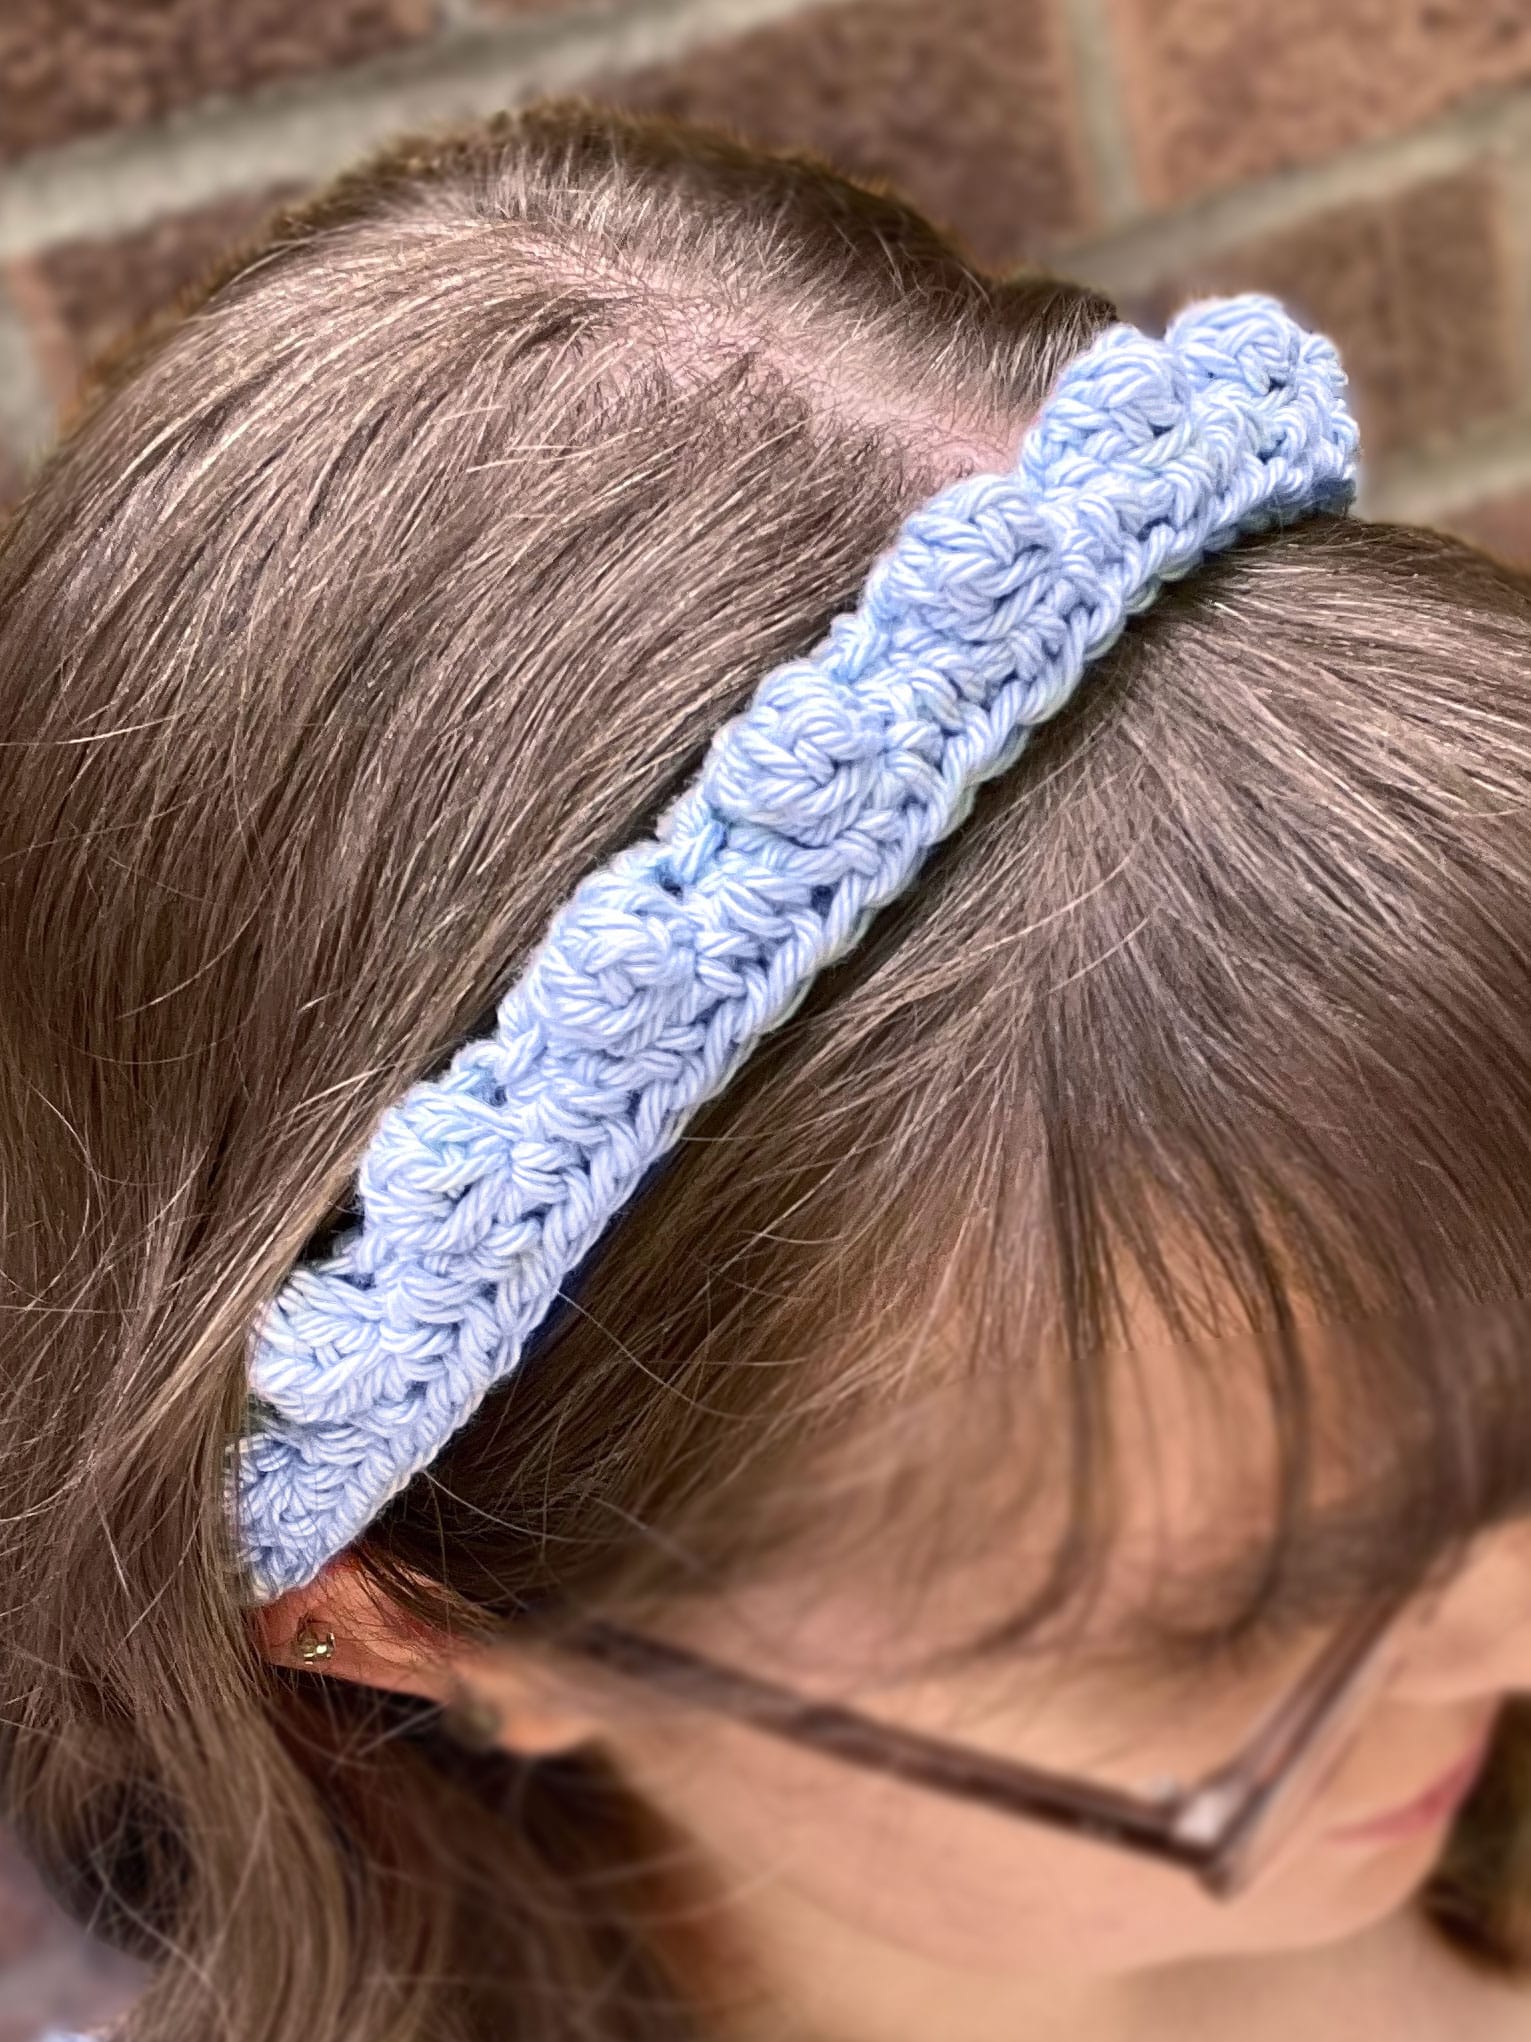 Bubble Tie Headband on head close view